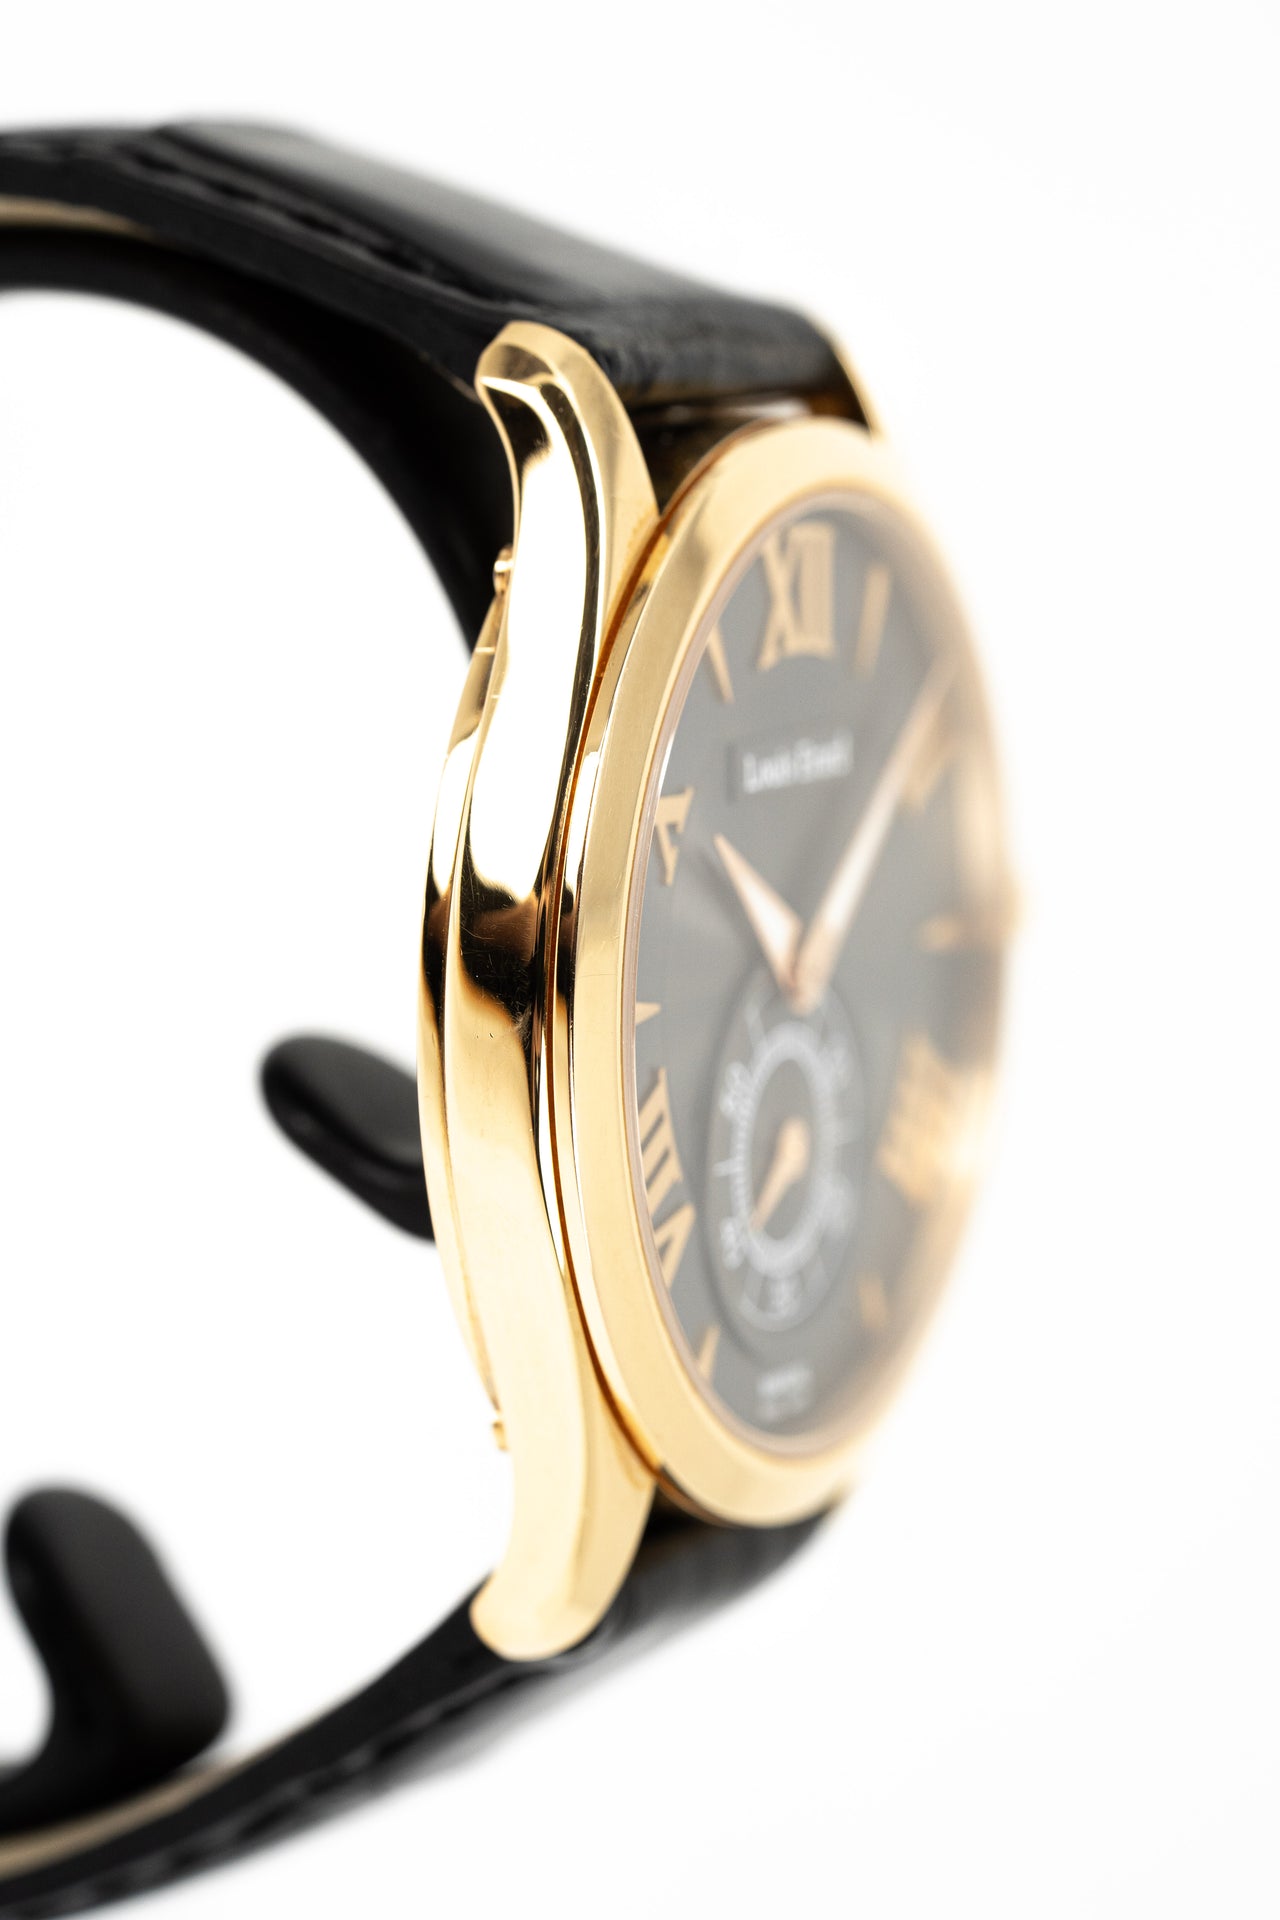 Louis Erard 18K Gold Plated Ladies Watch